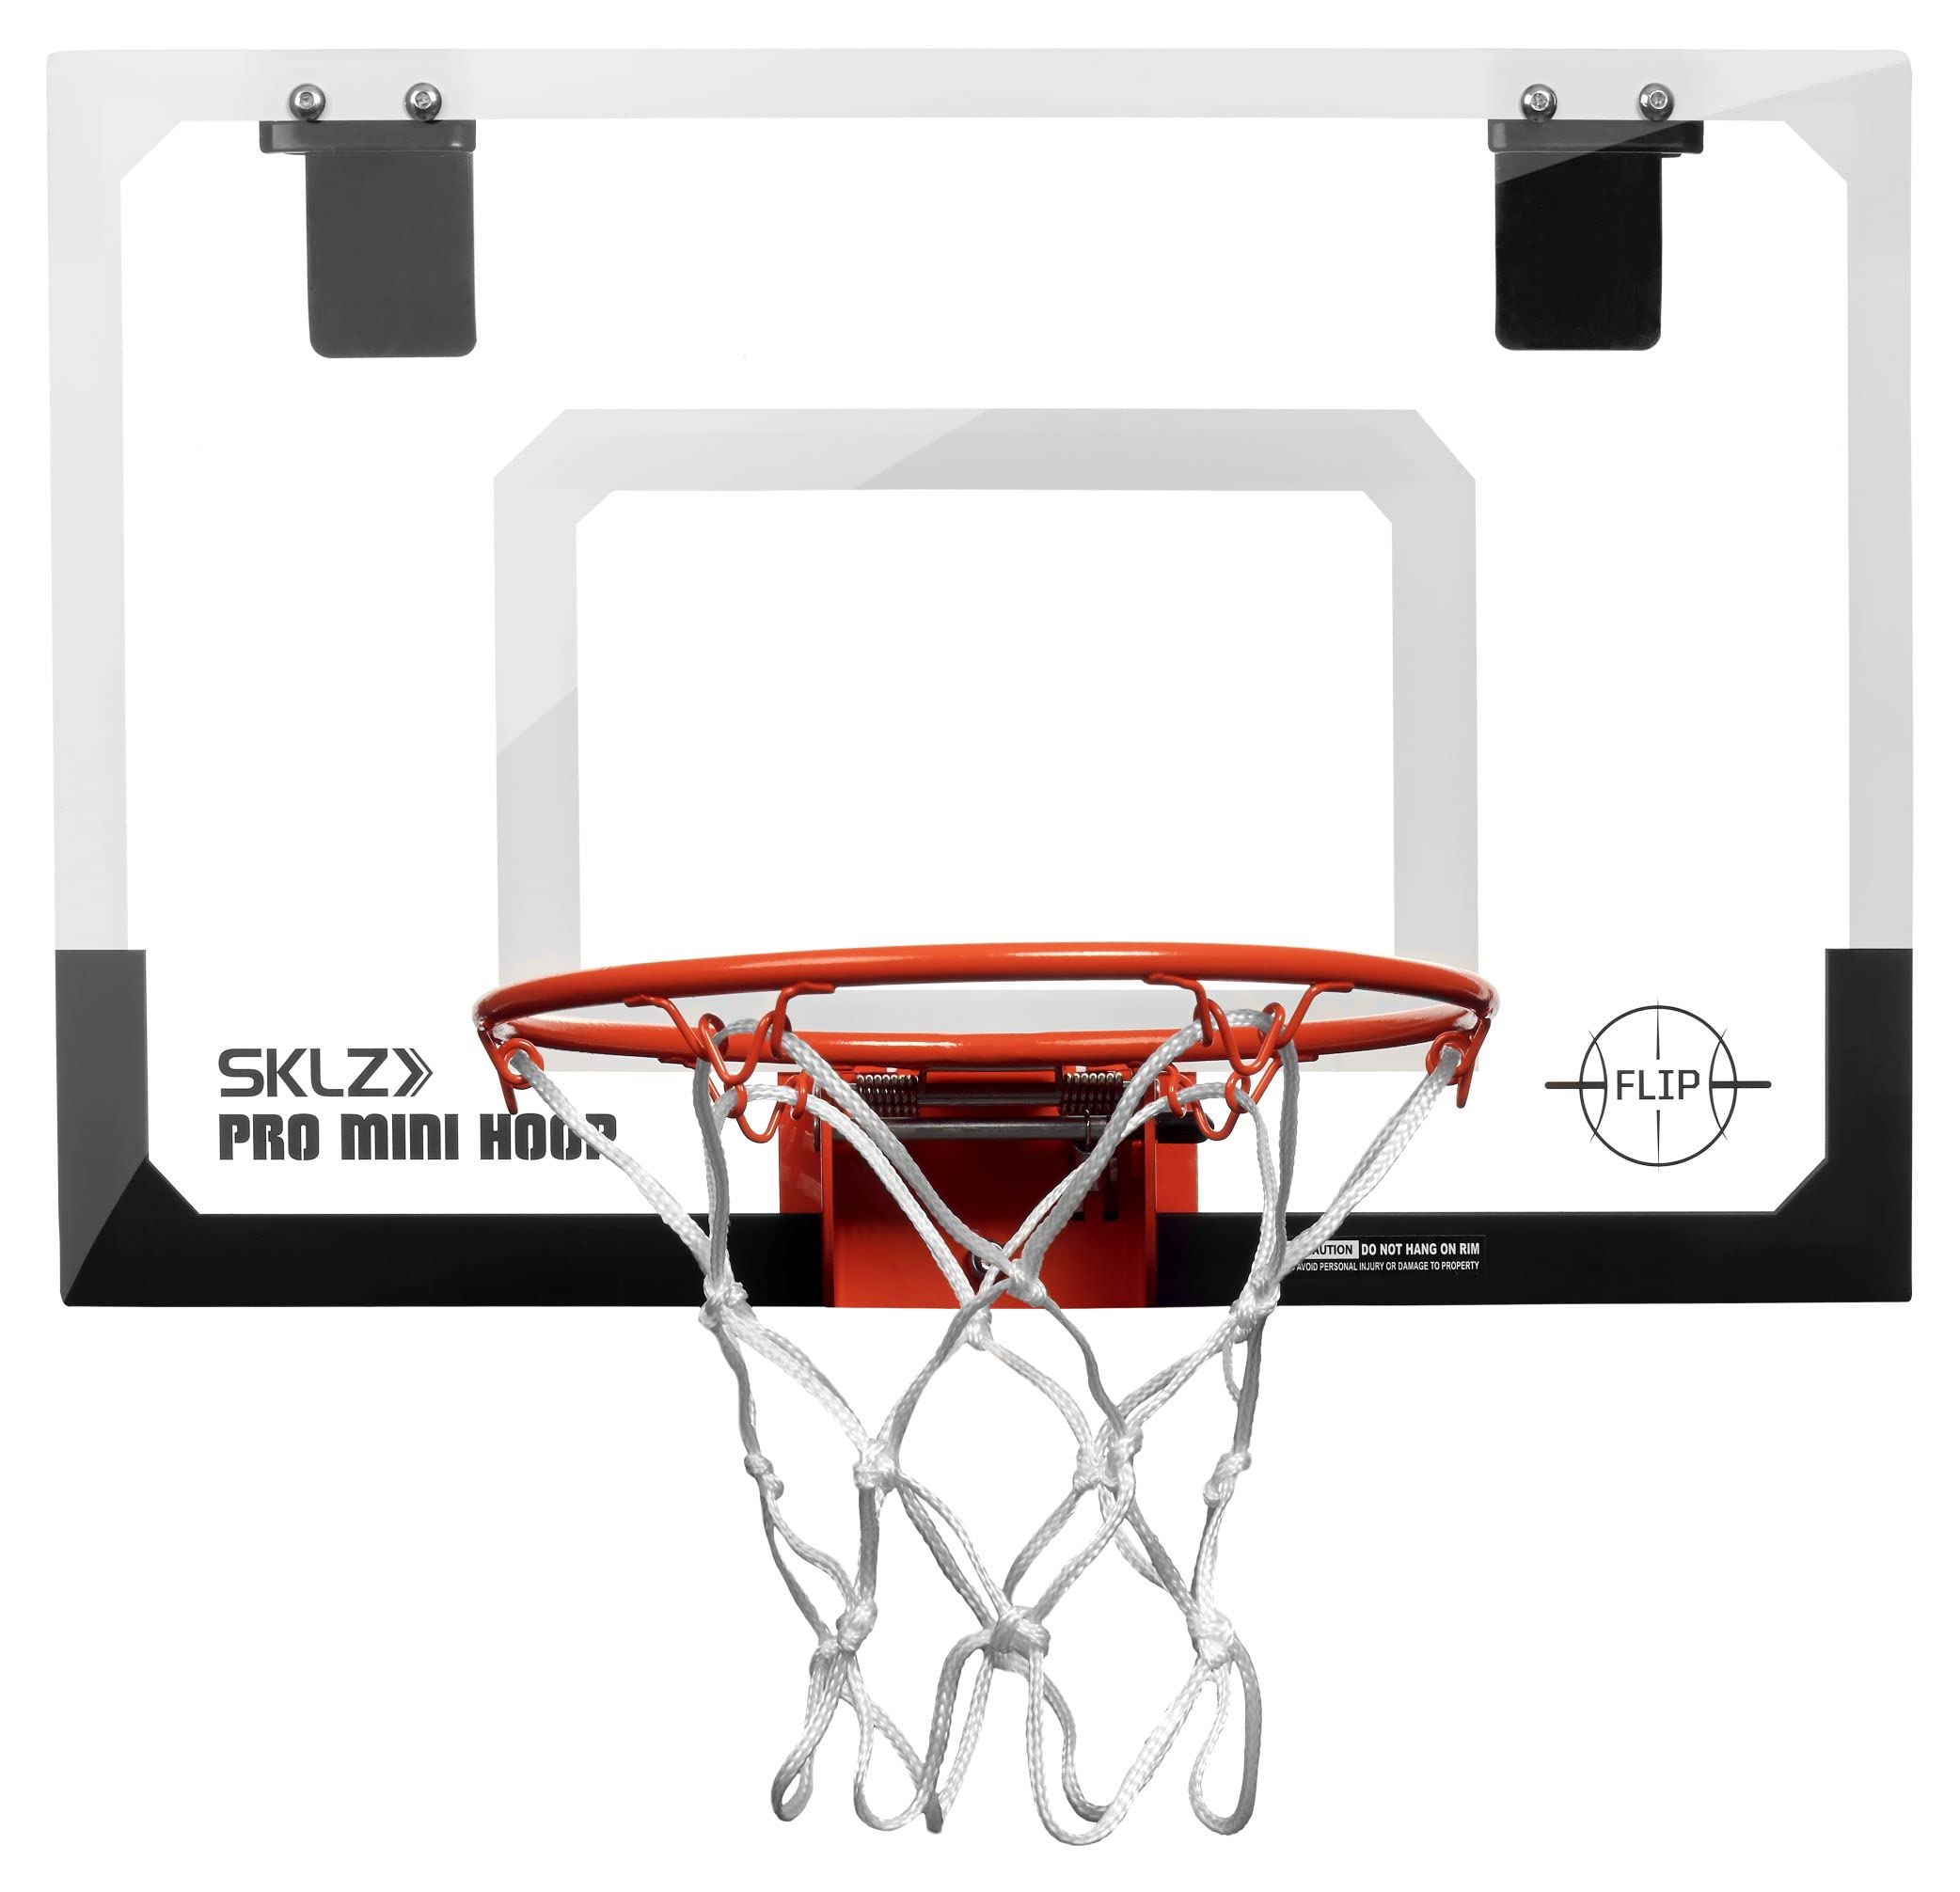 SKLZ Mini cesta de basquete profissional